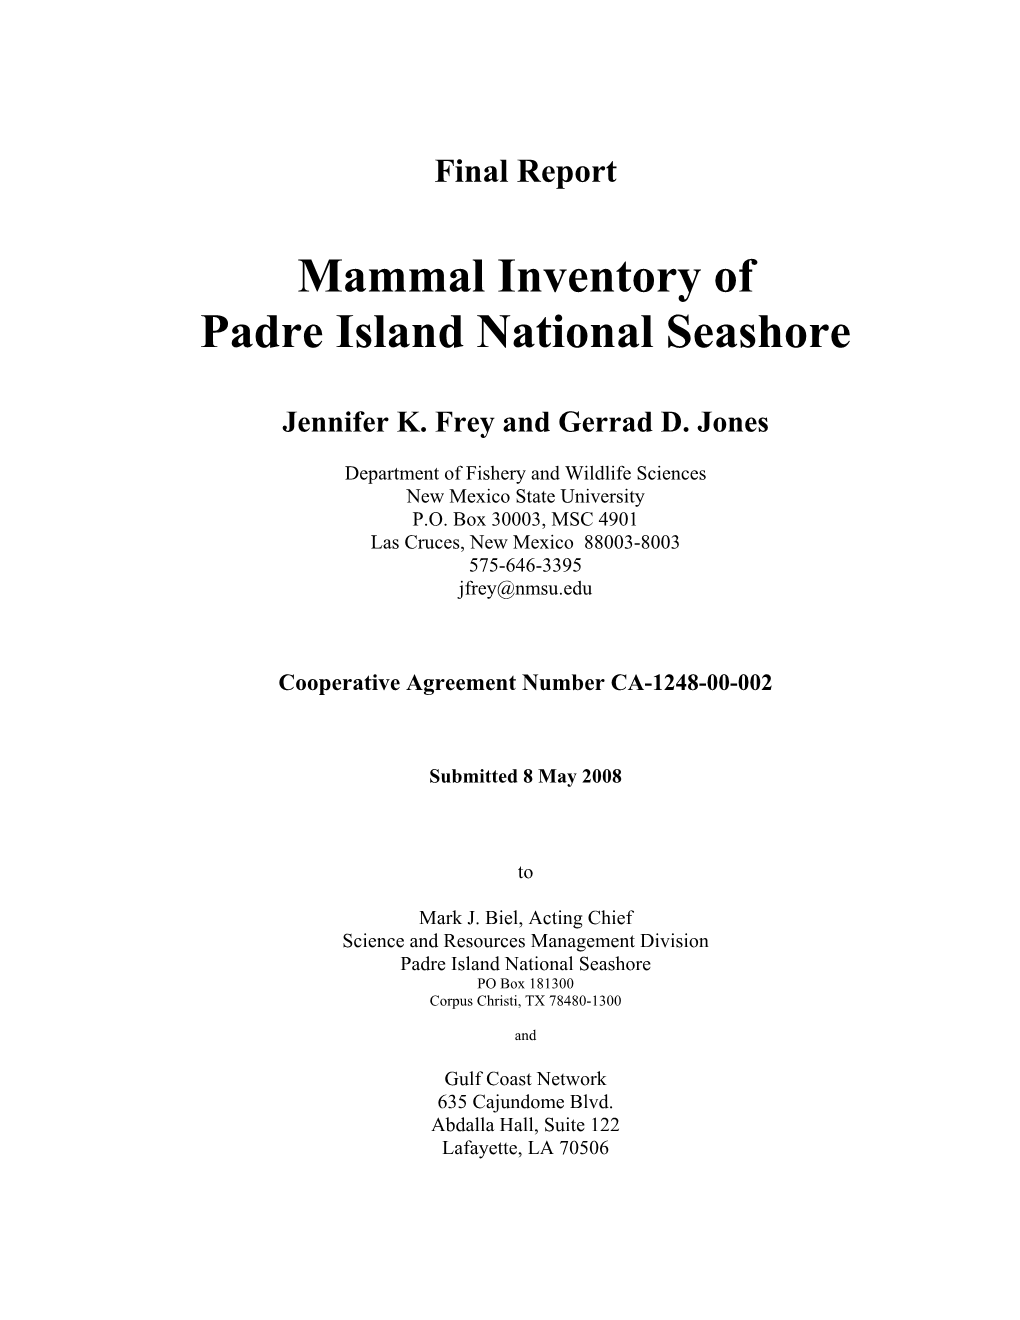 Mammal Inventroy of Padre Island National Seashore